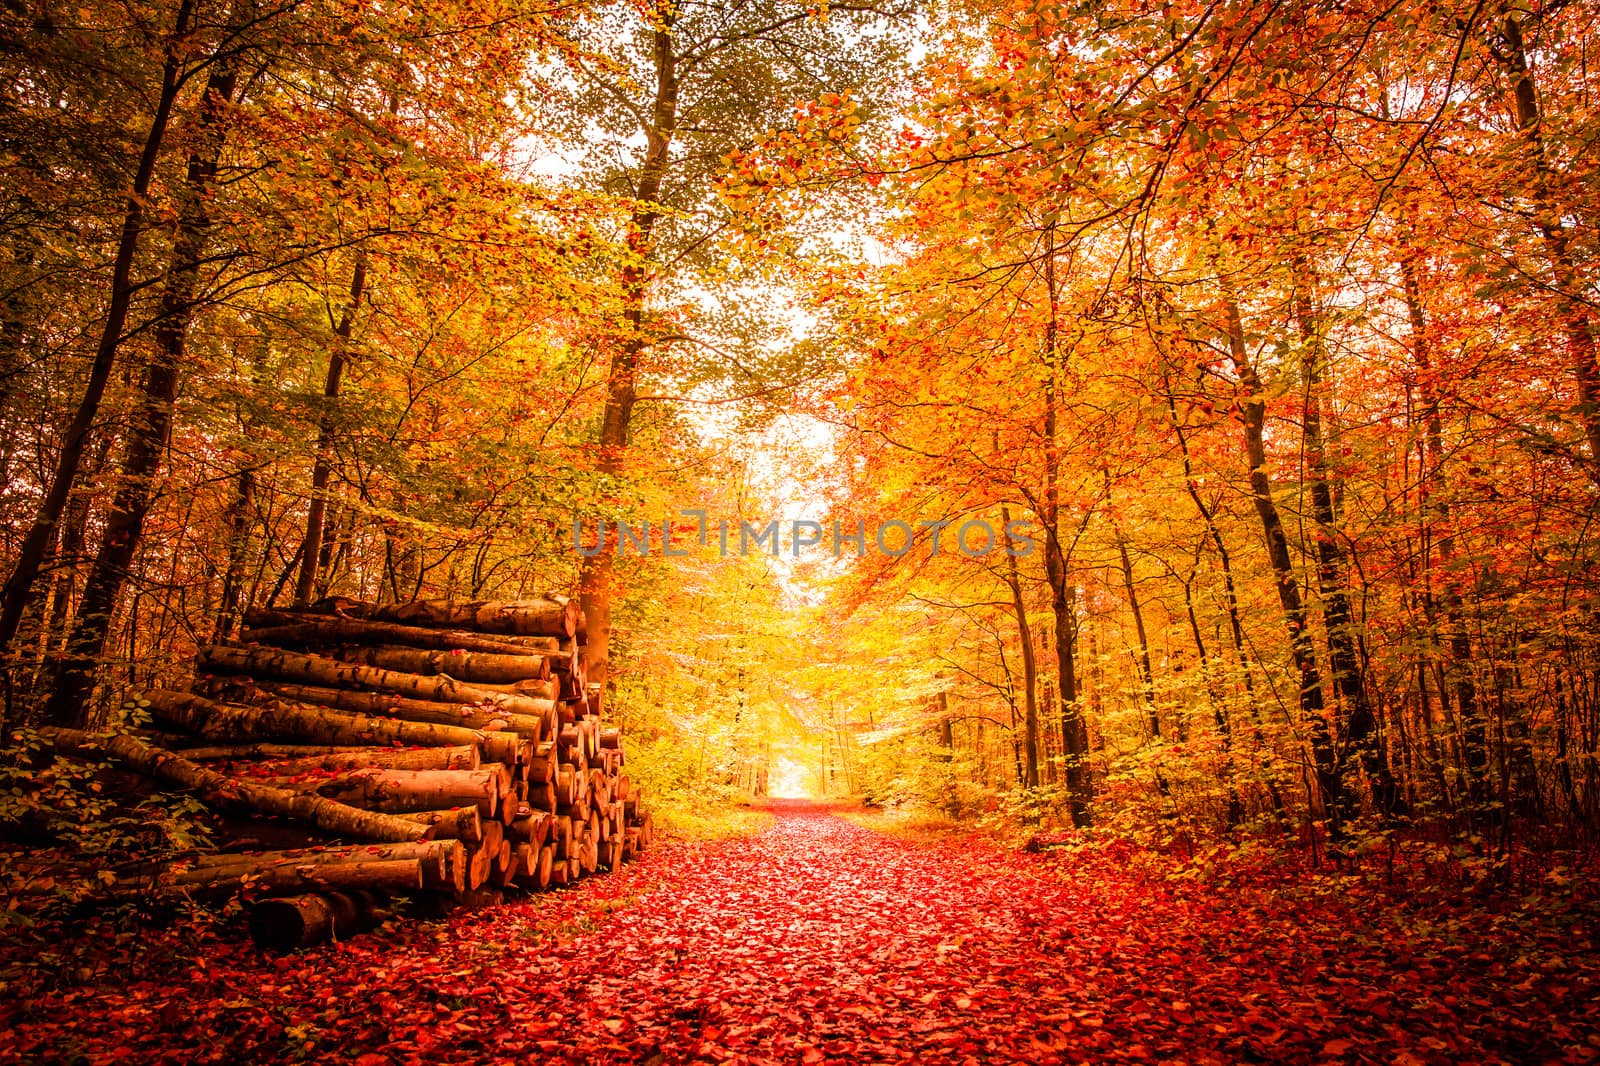 Beautiful autumn landscape in warm colors